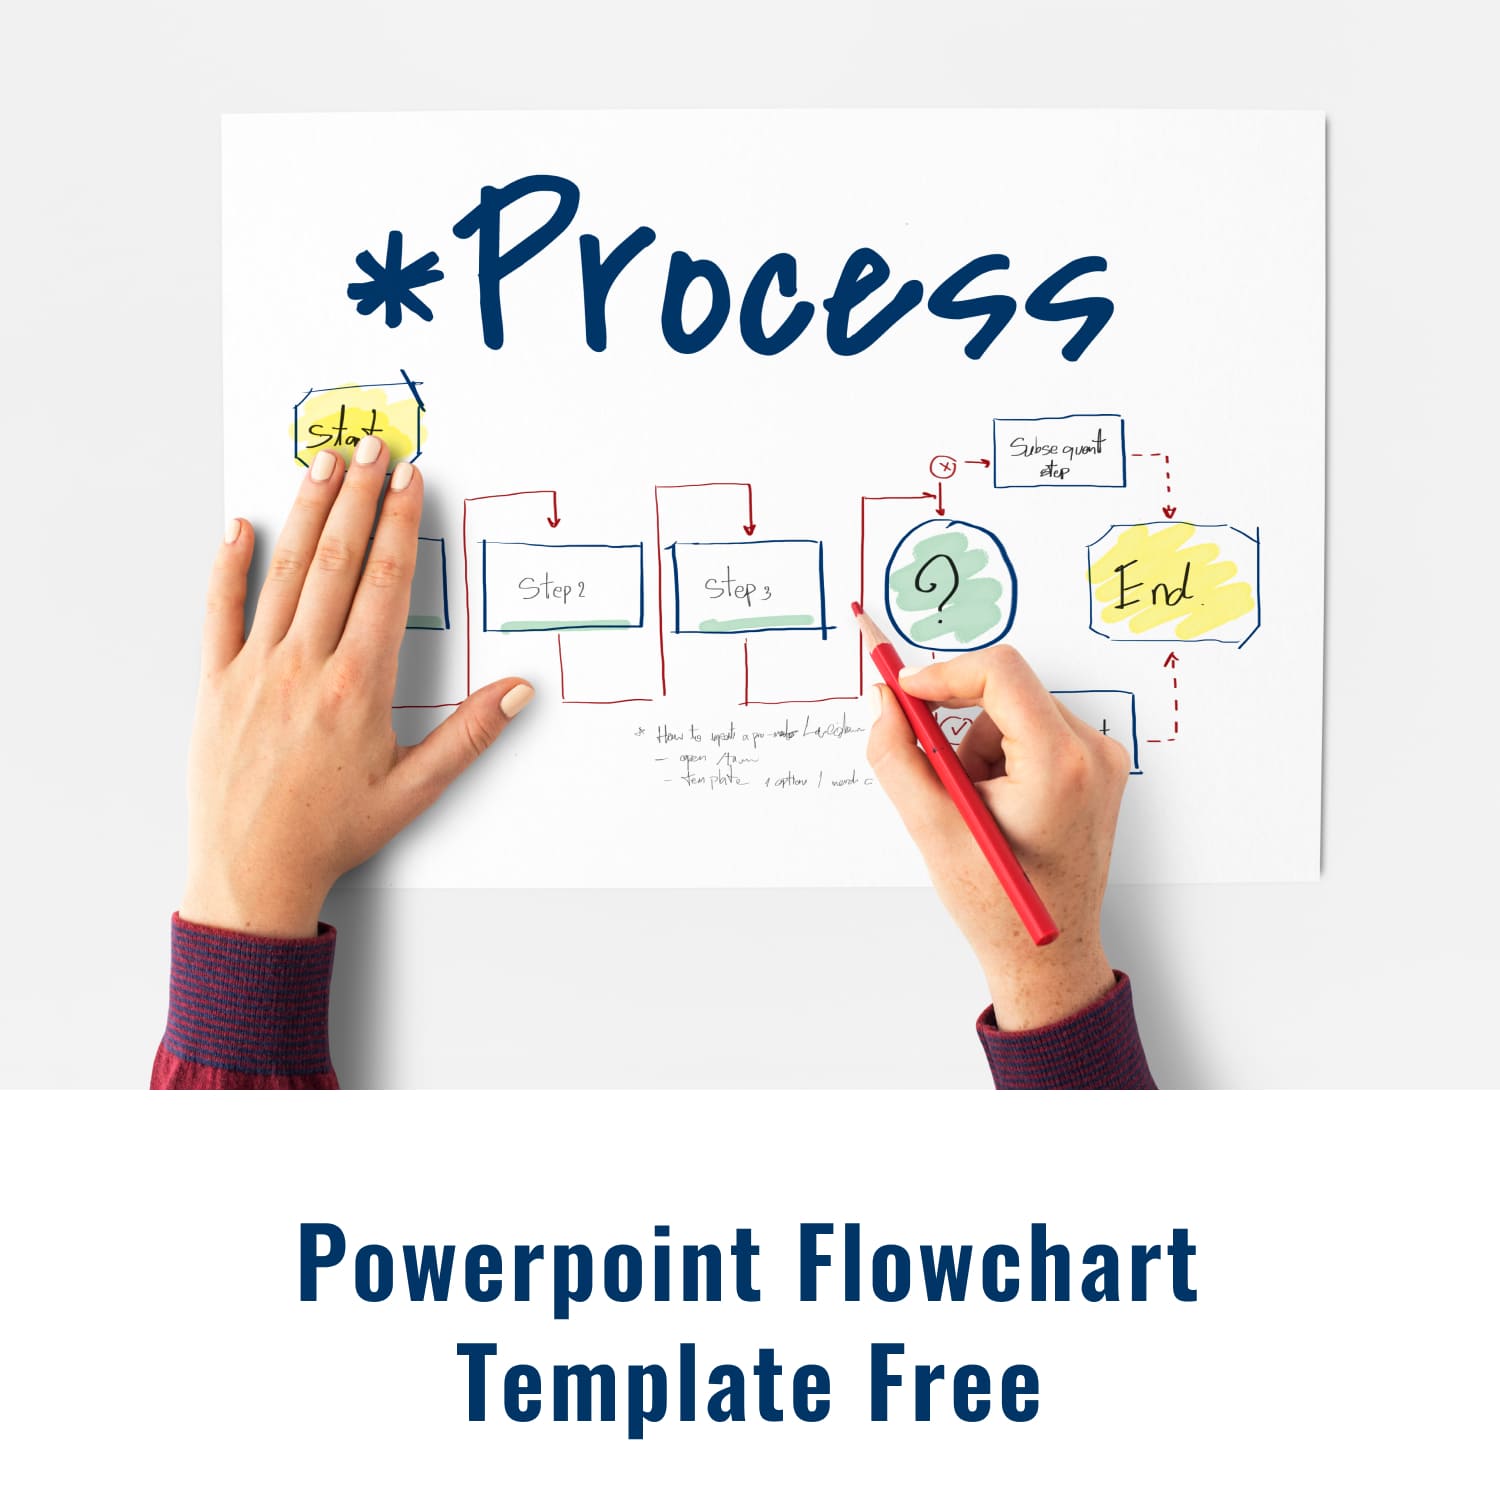 Powerpoint Flowchart Template Free 1500x1500 1.